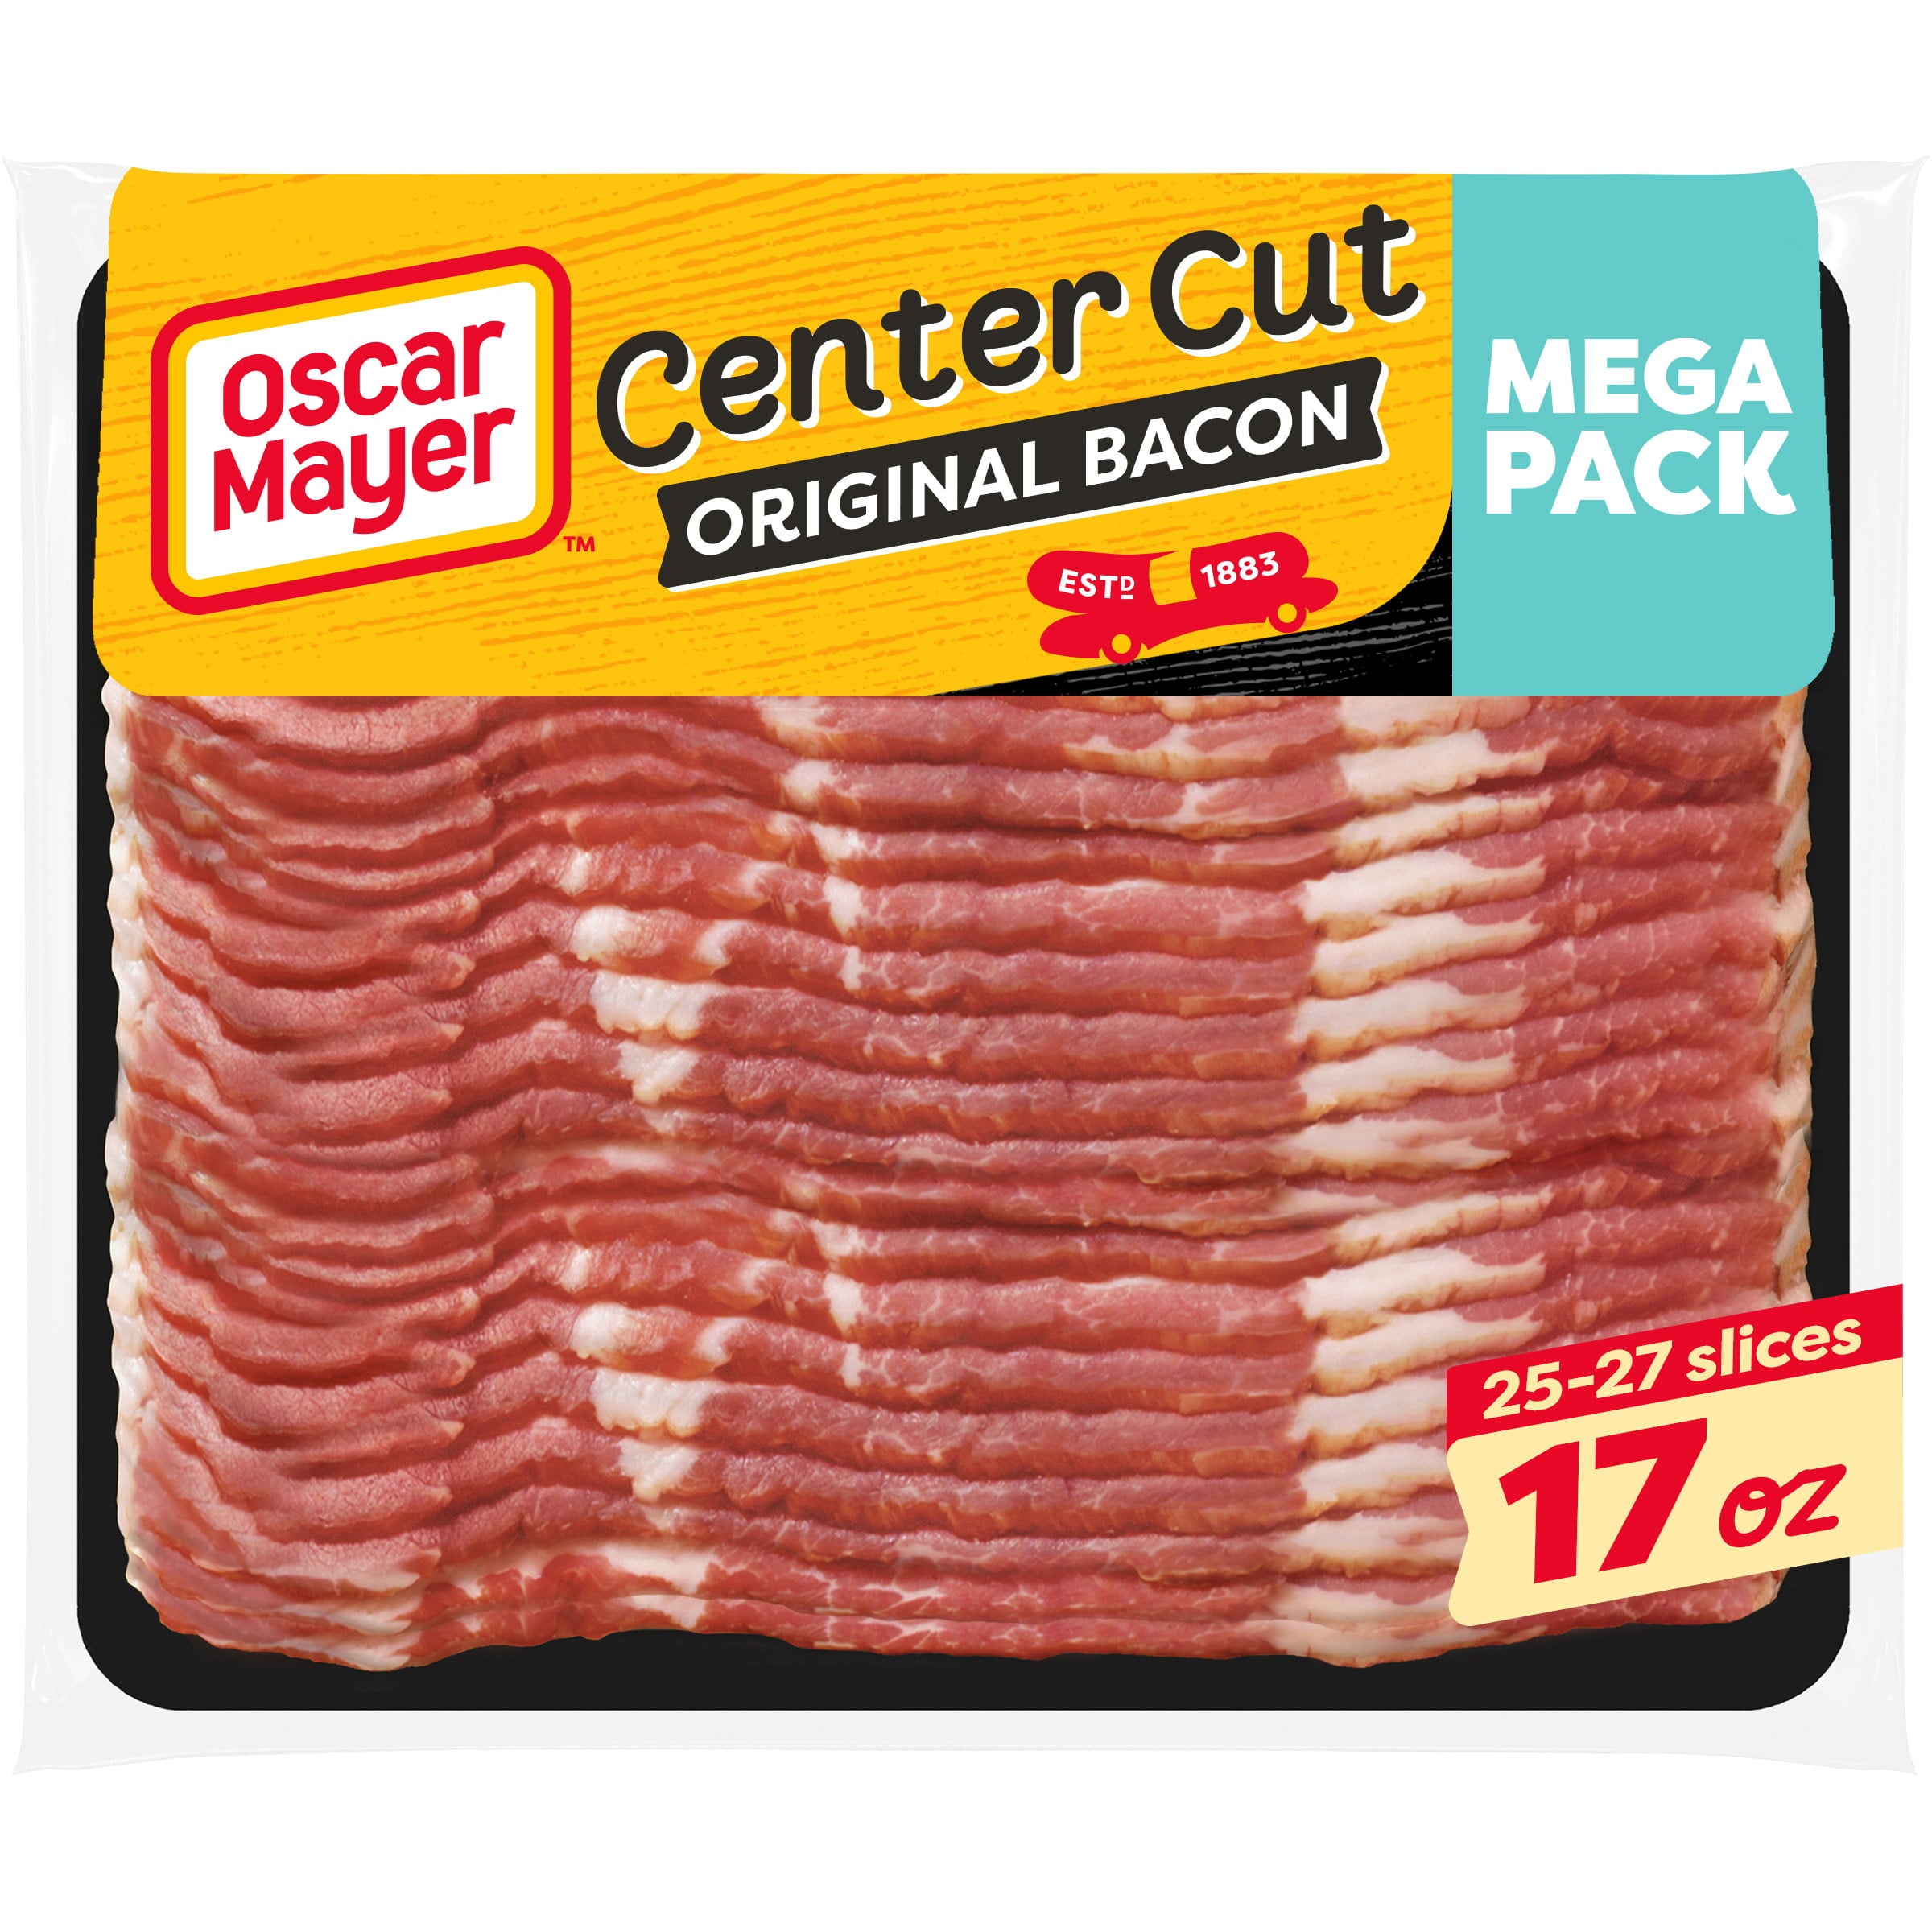 Oscar Mayer Center Cut Original Bacon Mega Pack, 17 oz Pack